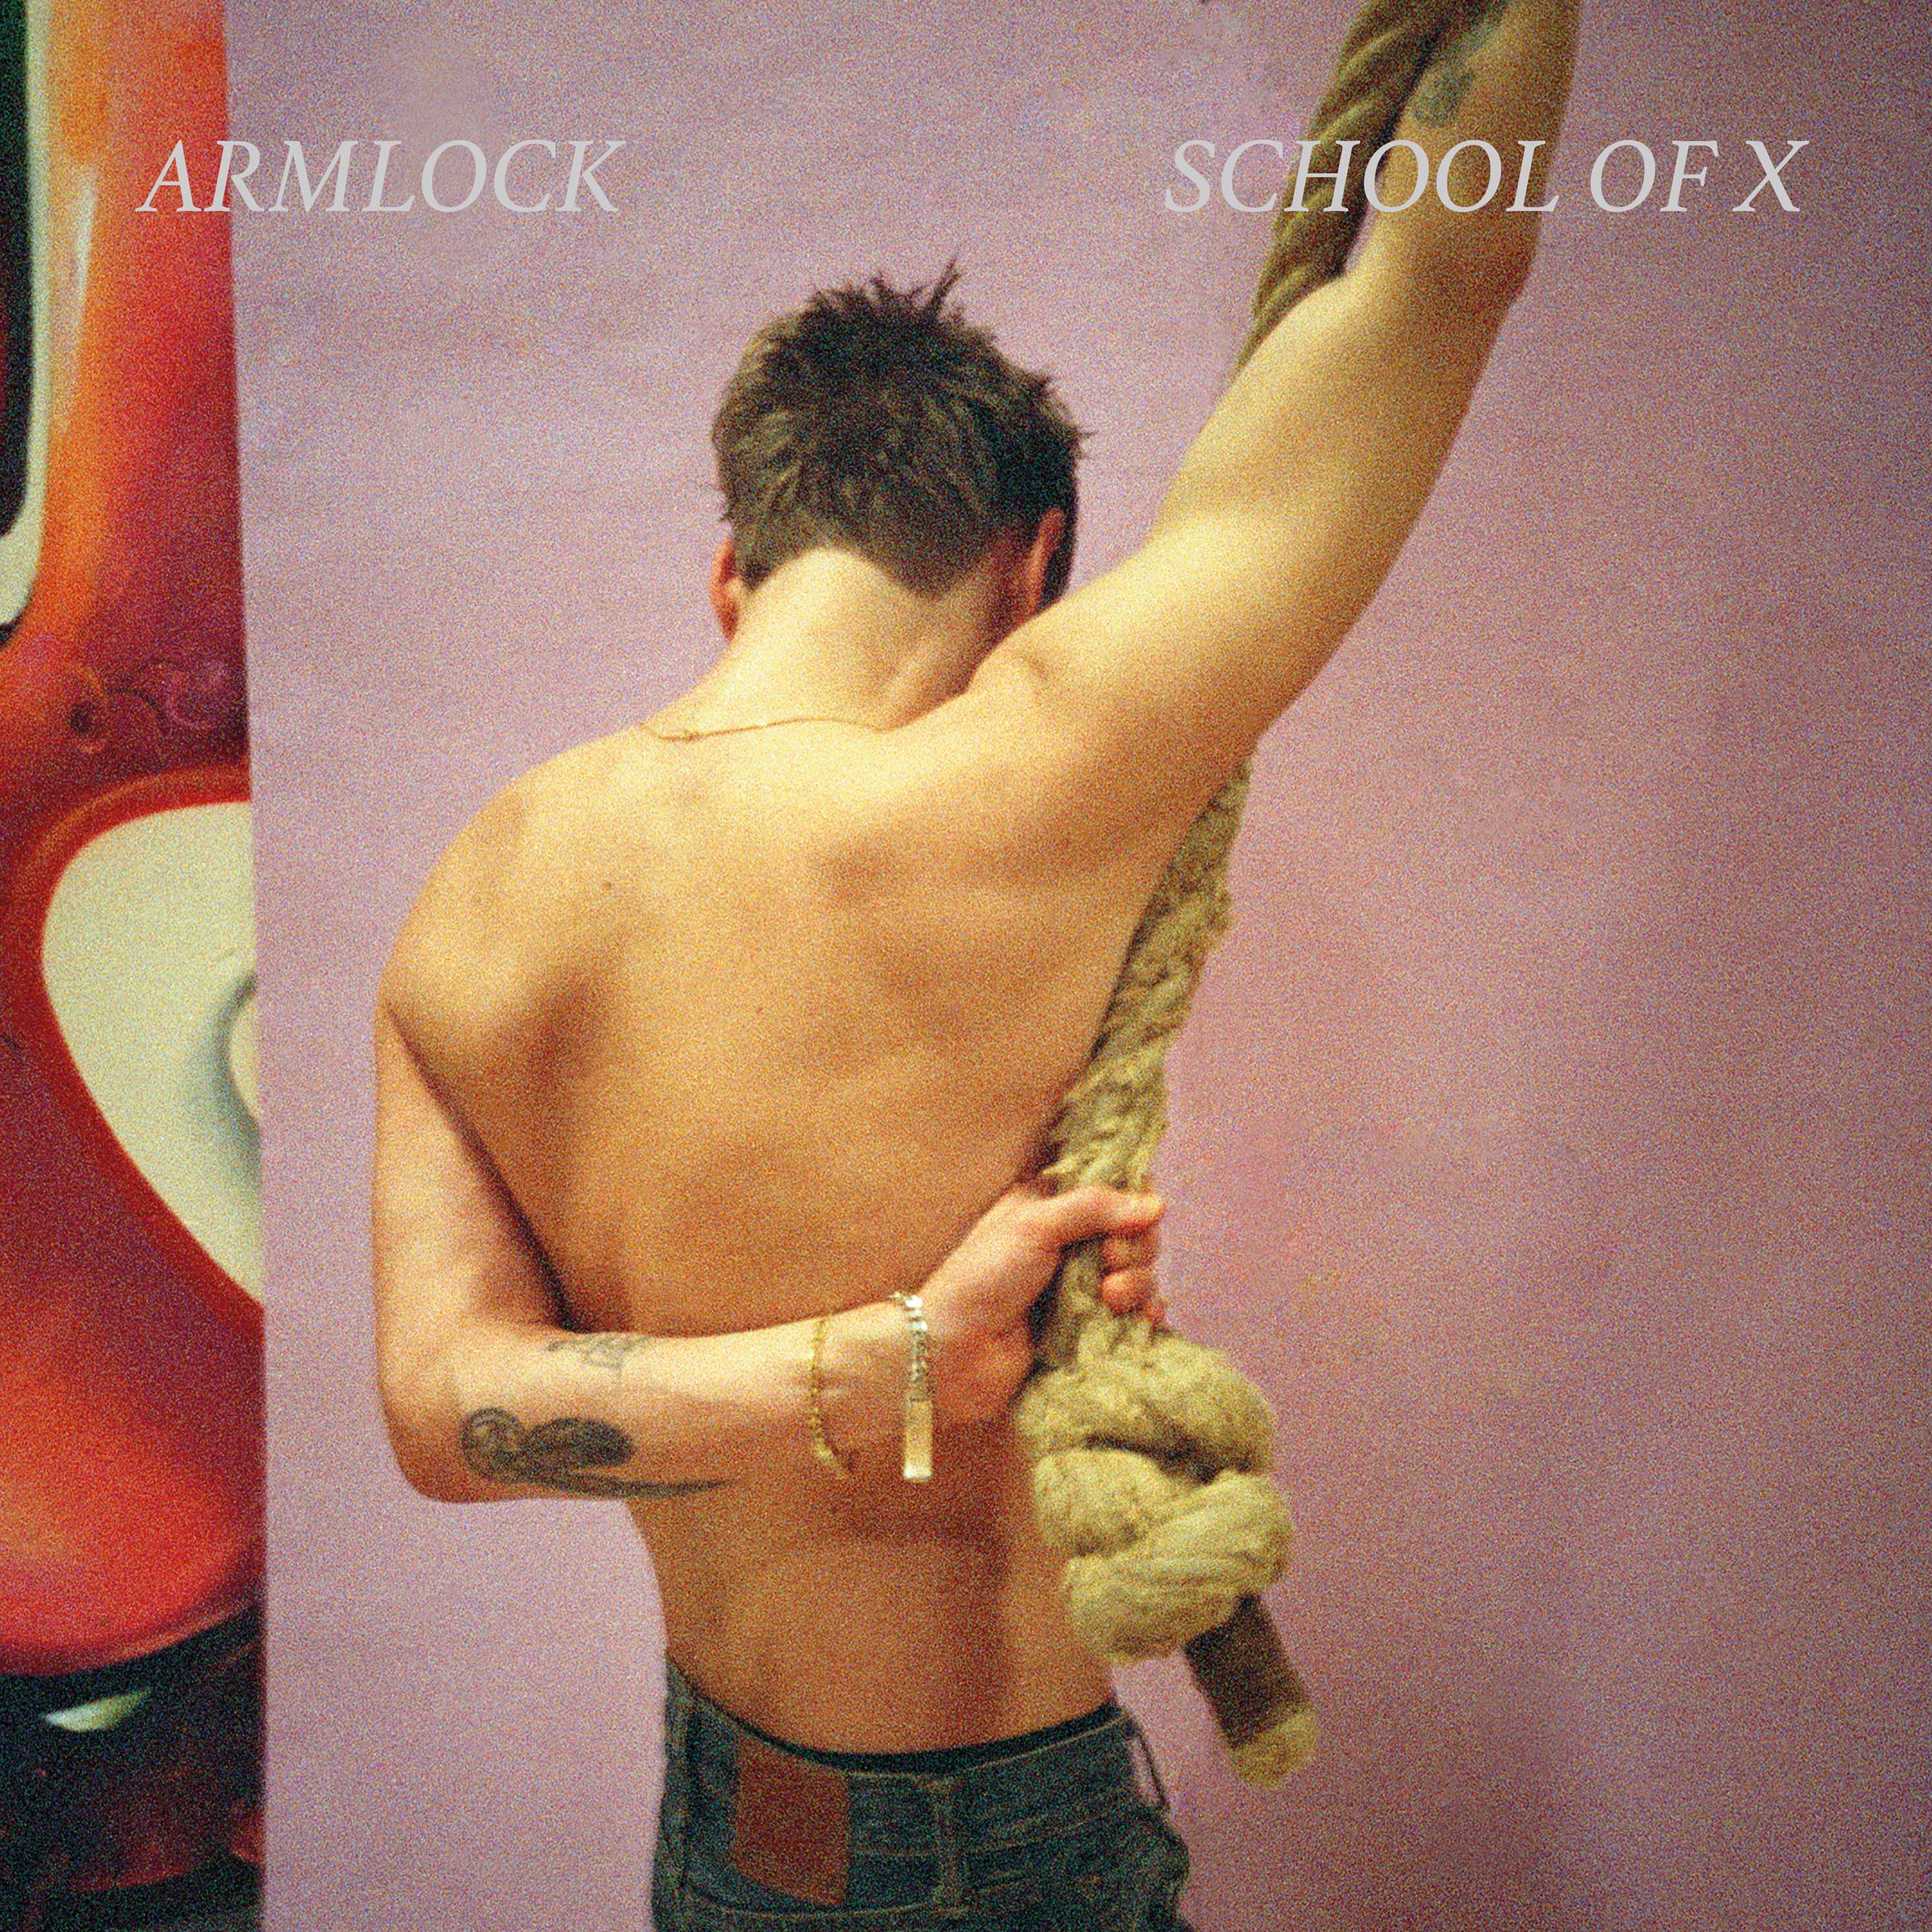 School of X - Armlock - CD